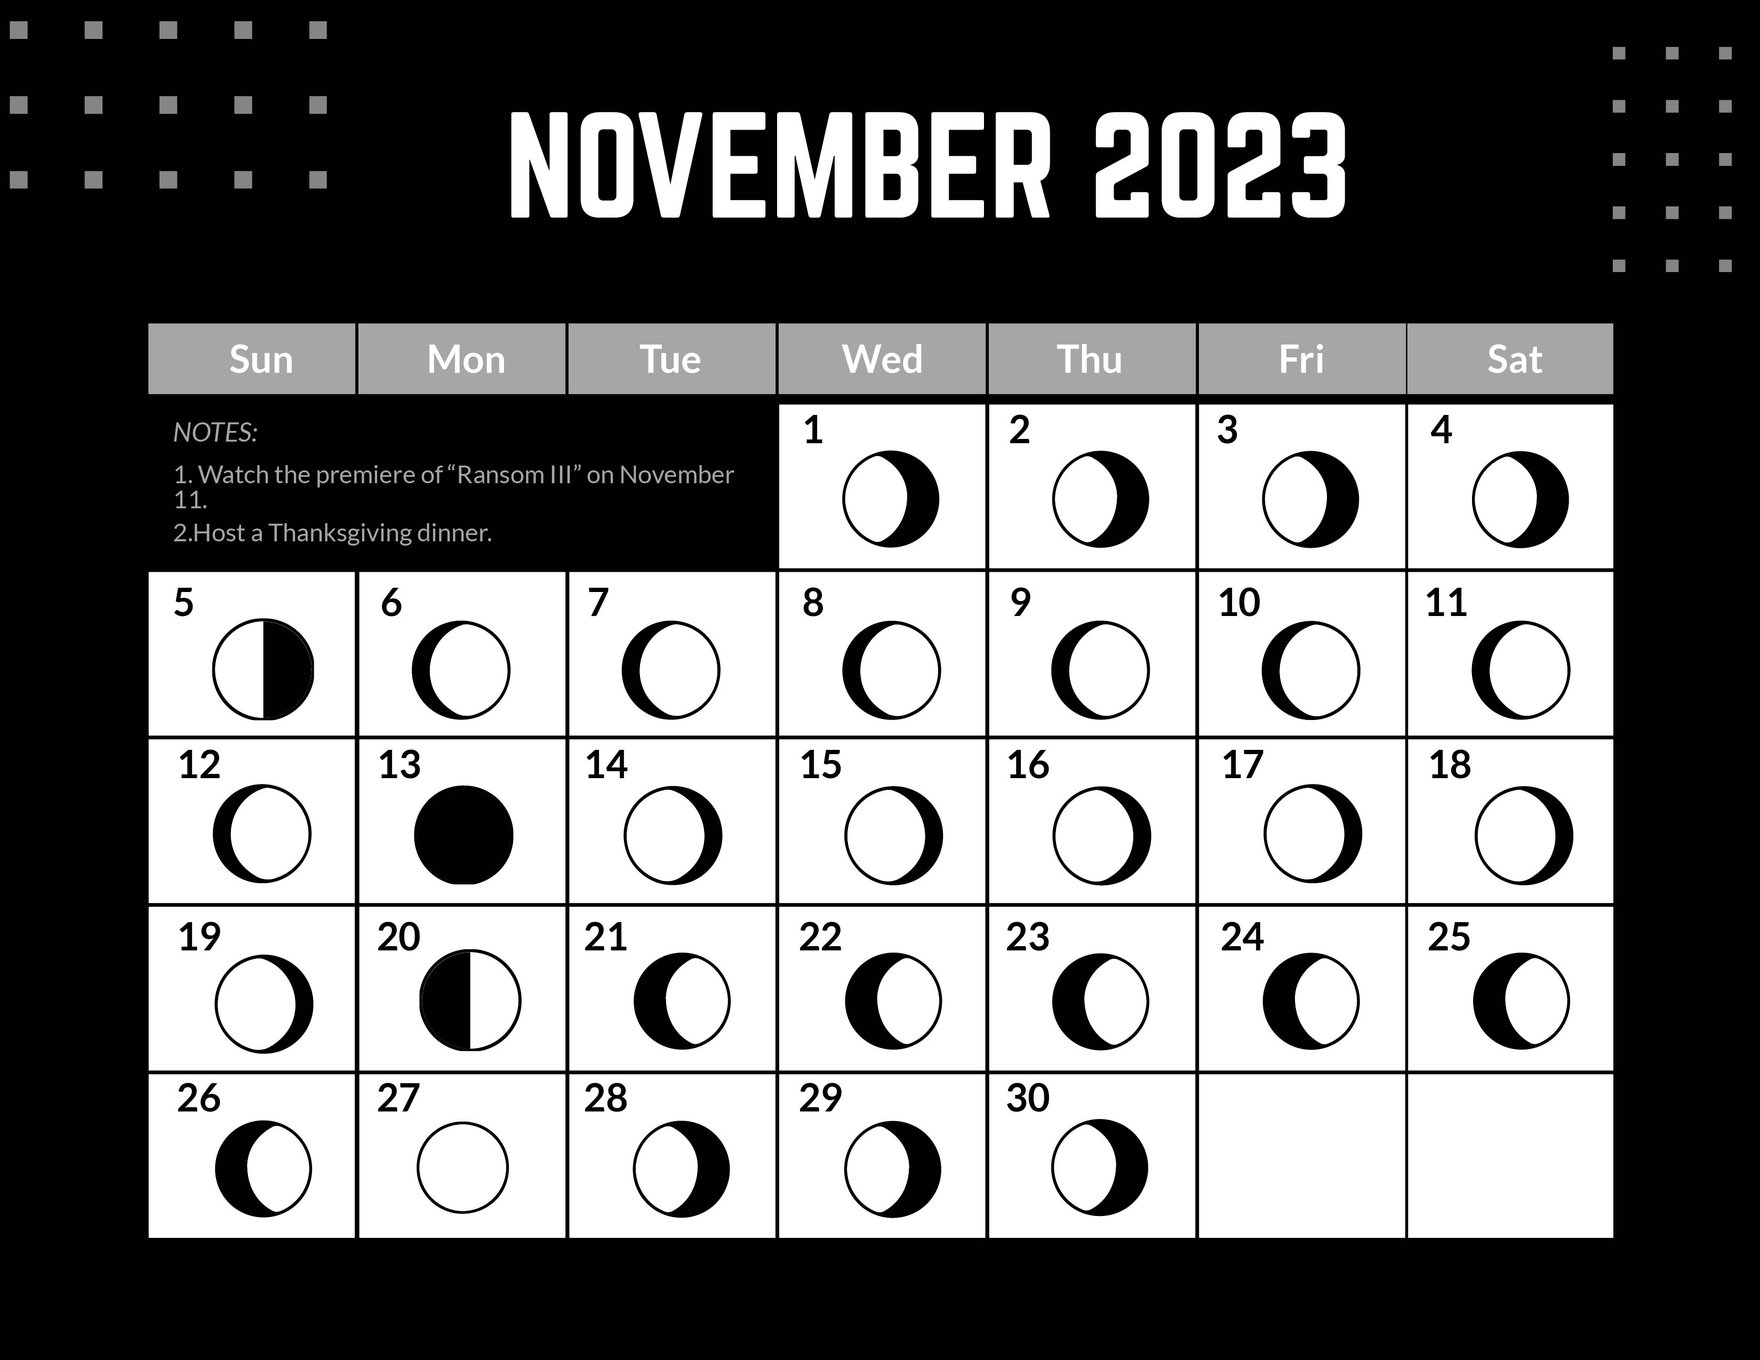 Free November 2023 Calendar Template With Moon Phases - Eps, Google Docs,  Google Sheets, Illustrator, Jpg, Excel, Word, Svg | Template.net